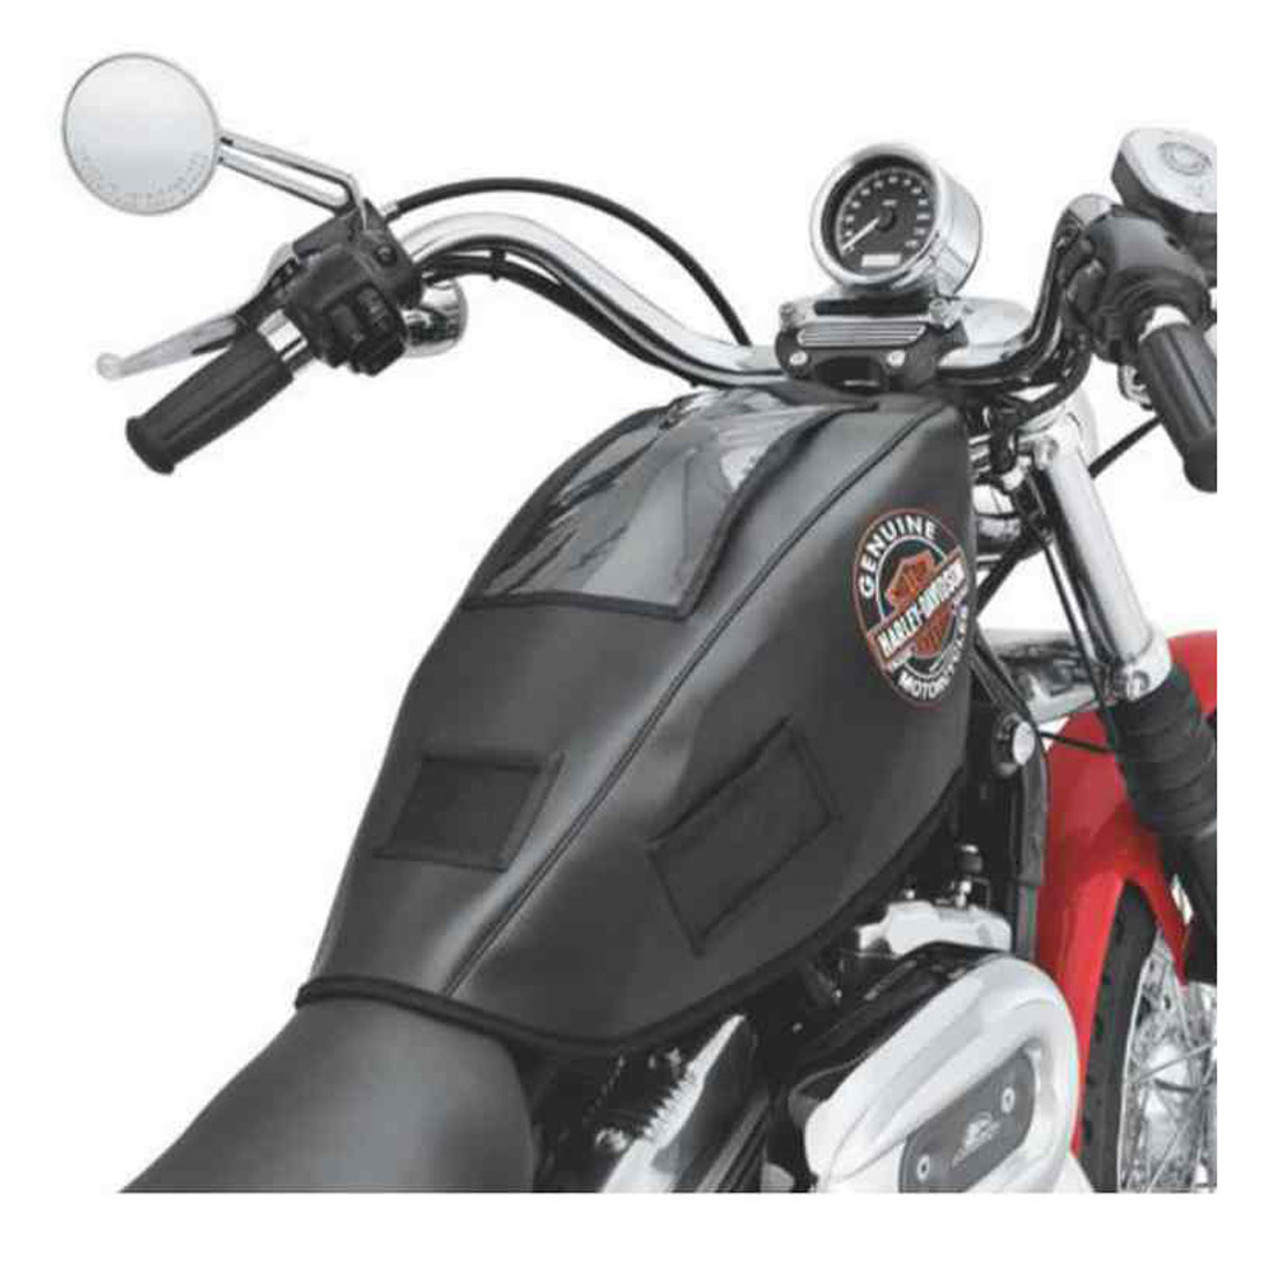  Coolsheep Motorcycle Fuel Tank Cover Panel Bib Bra